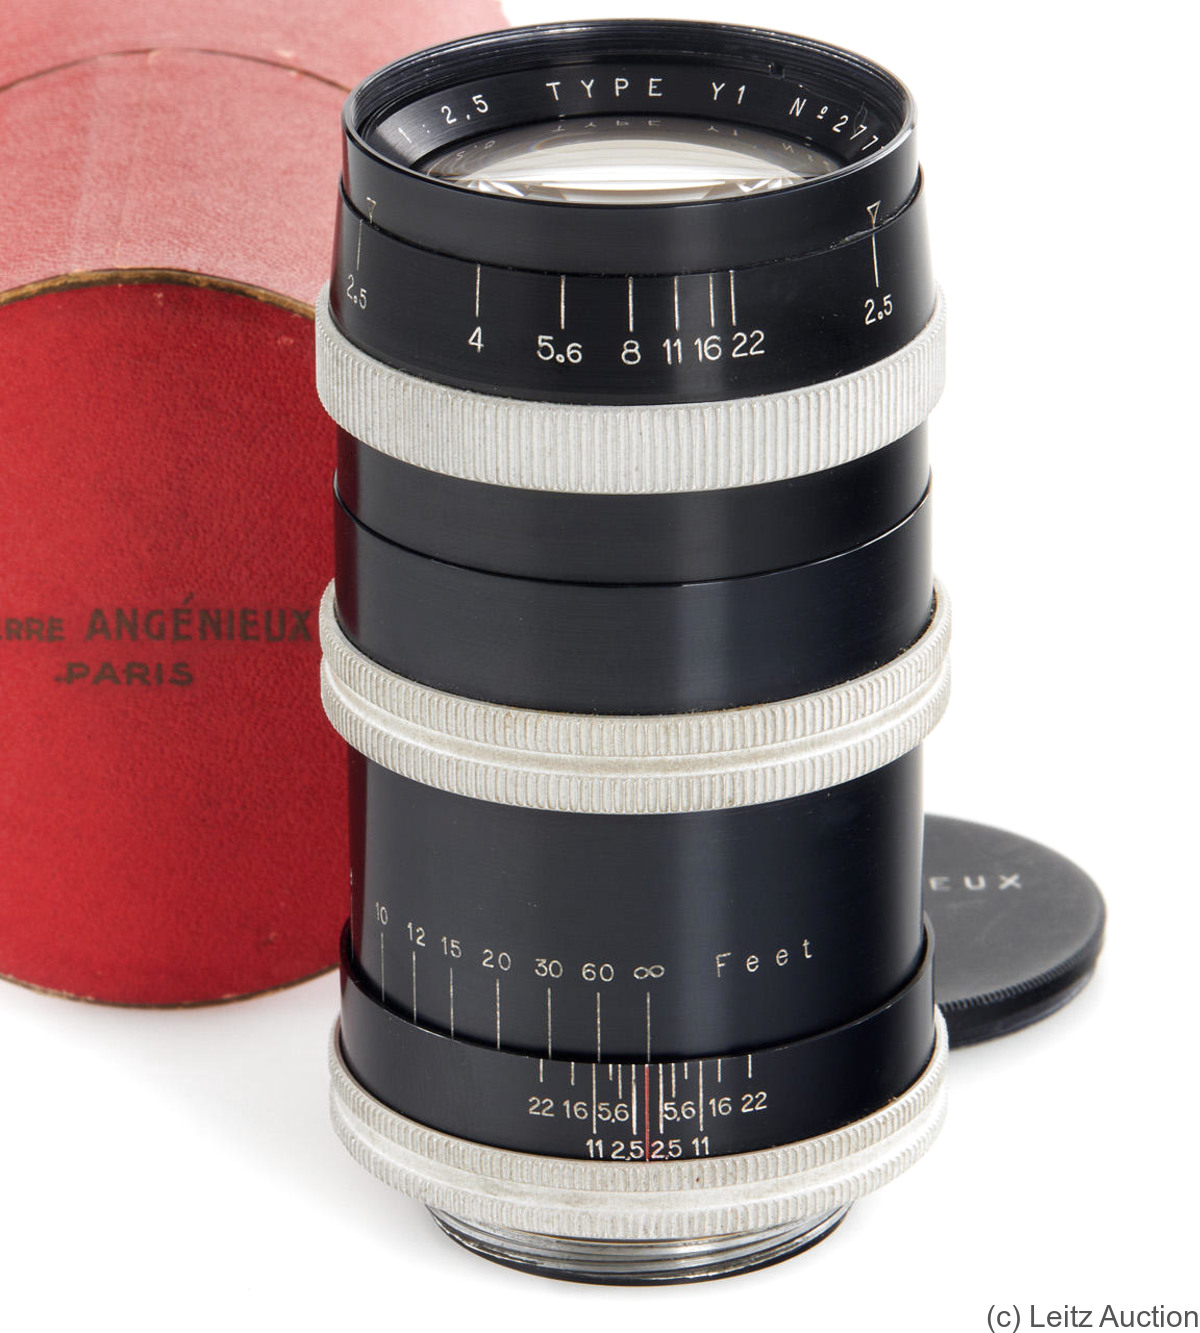 Angénieux: 90mm (9cm) f2.5 Type Y1 (M39, black/chrome) camera